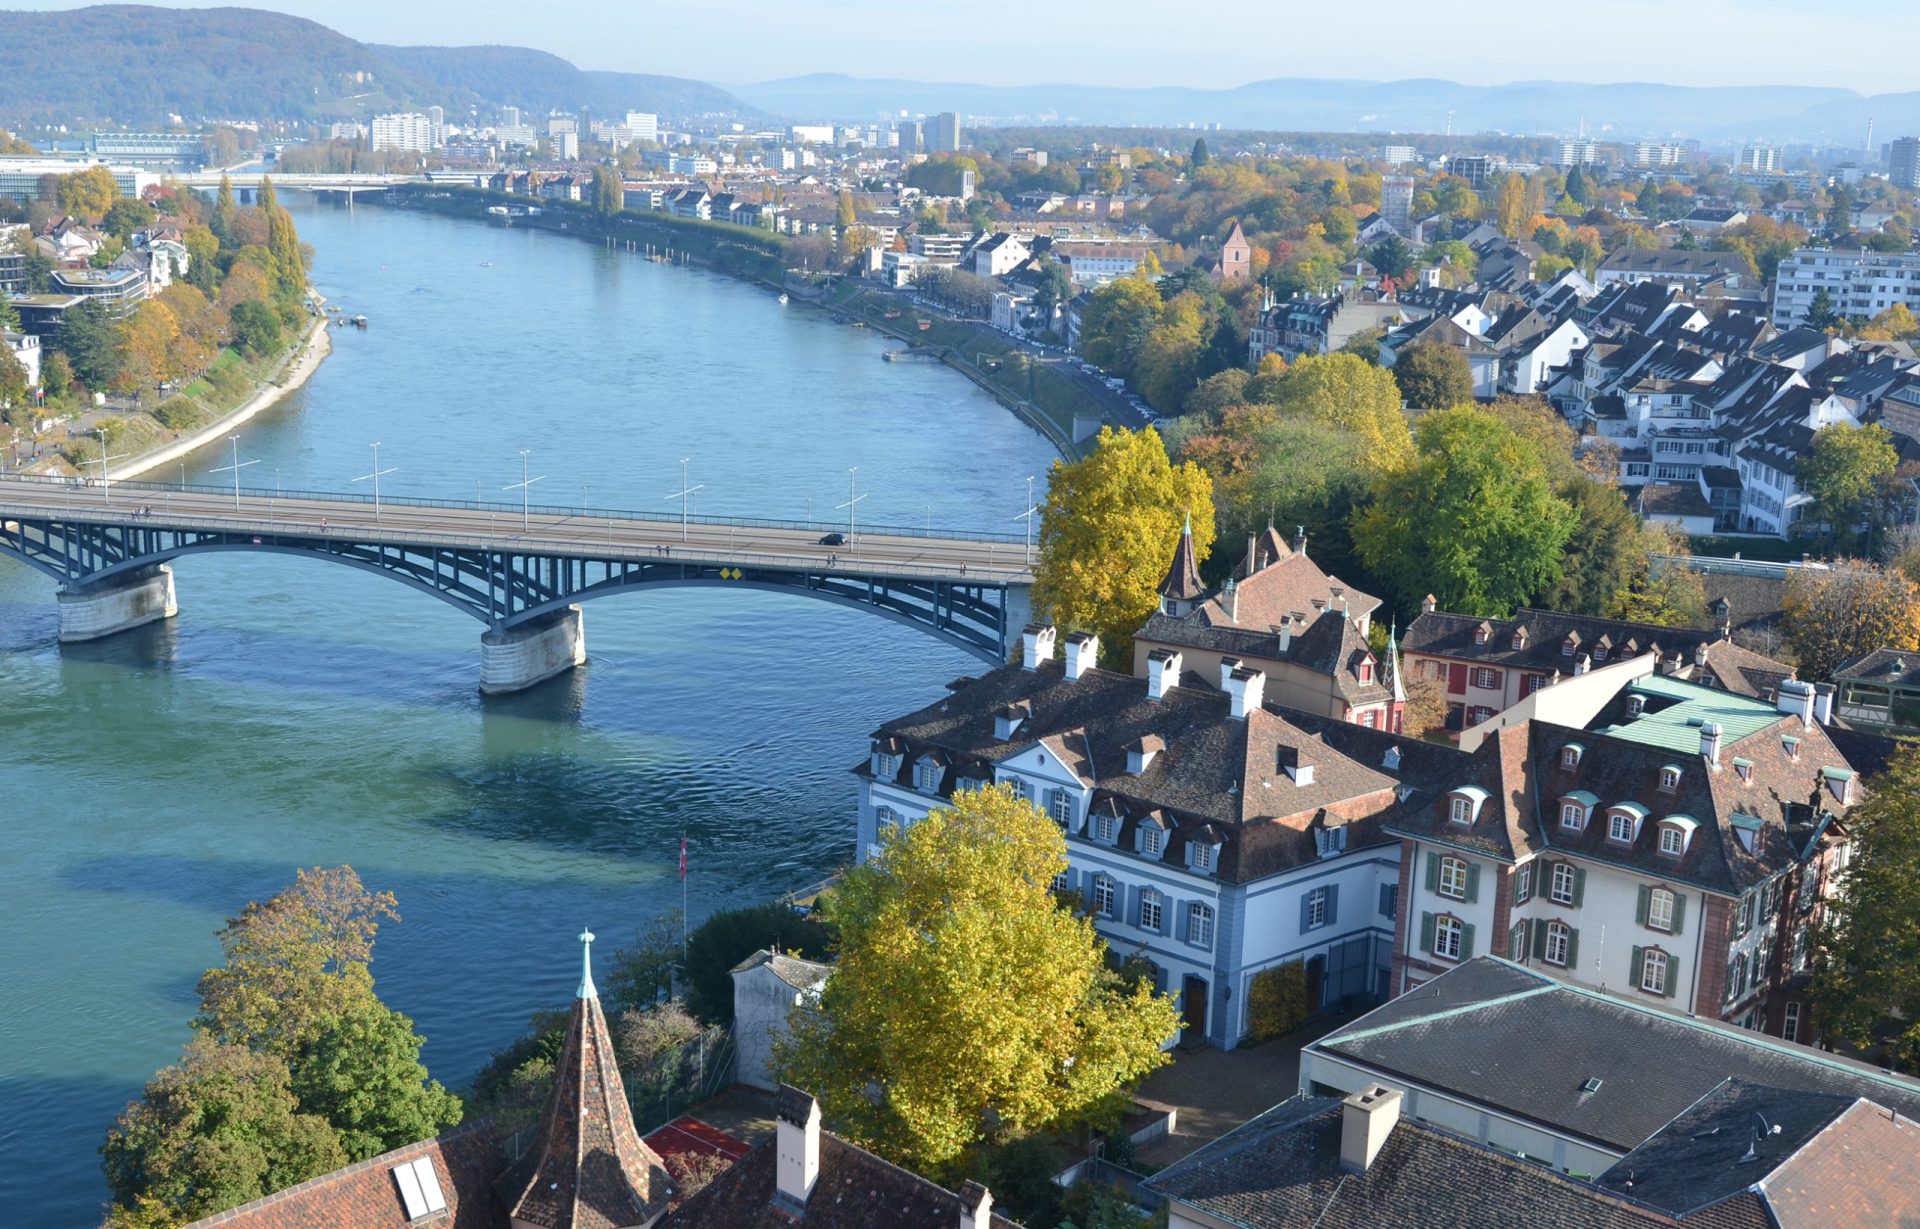 Suíça vai referendar rendimento básico de 2250 euros para todos os cidadãos